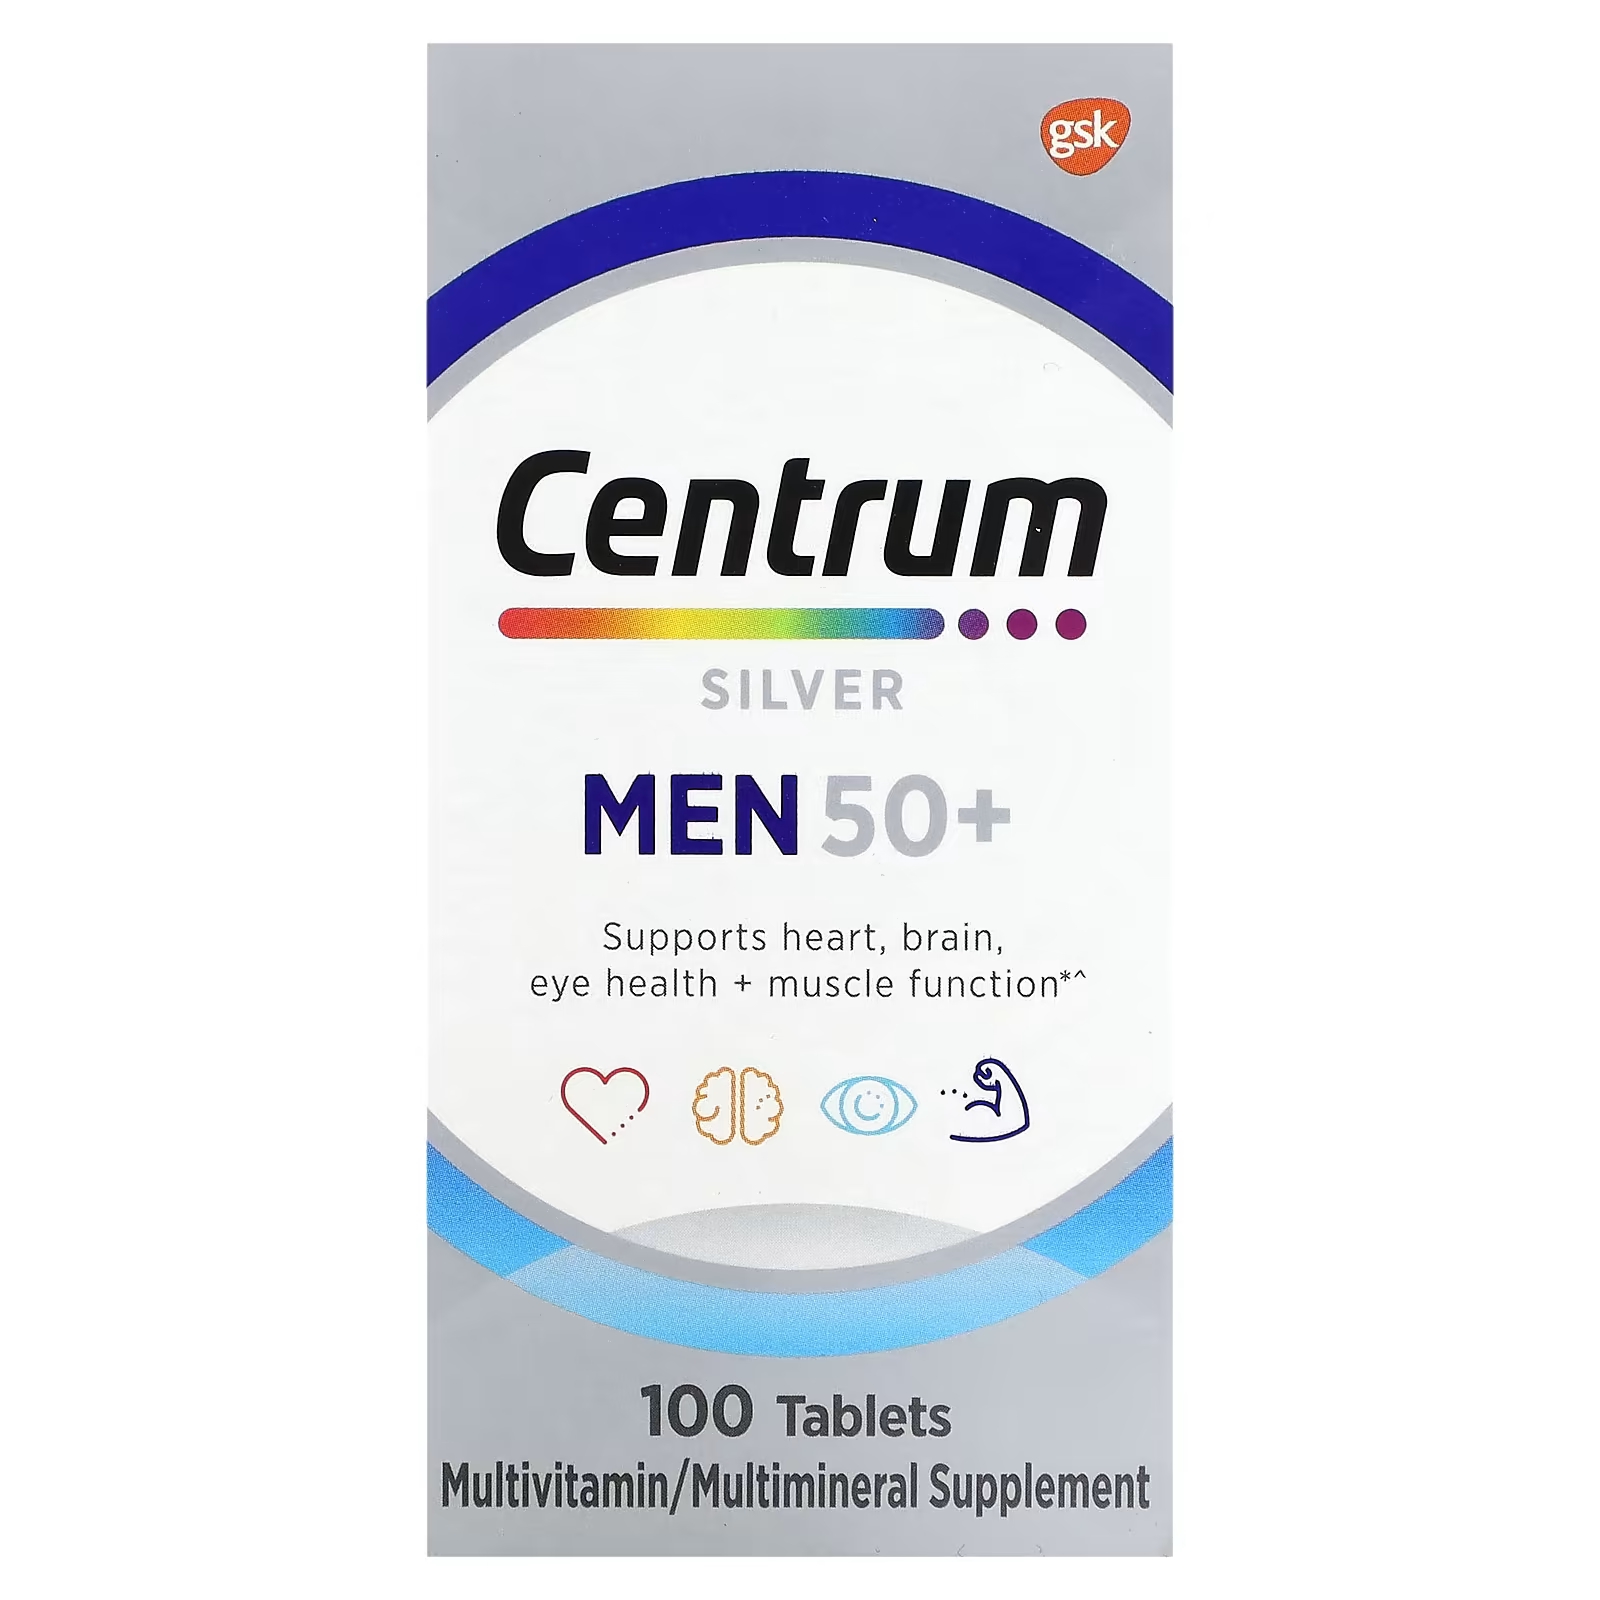 Мультивитаминная добавка Centrum Silver для мужчин 50+, 100 таблеток мультивитаминная добавка centrum silver для женщин 50 100 таблеток